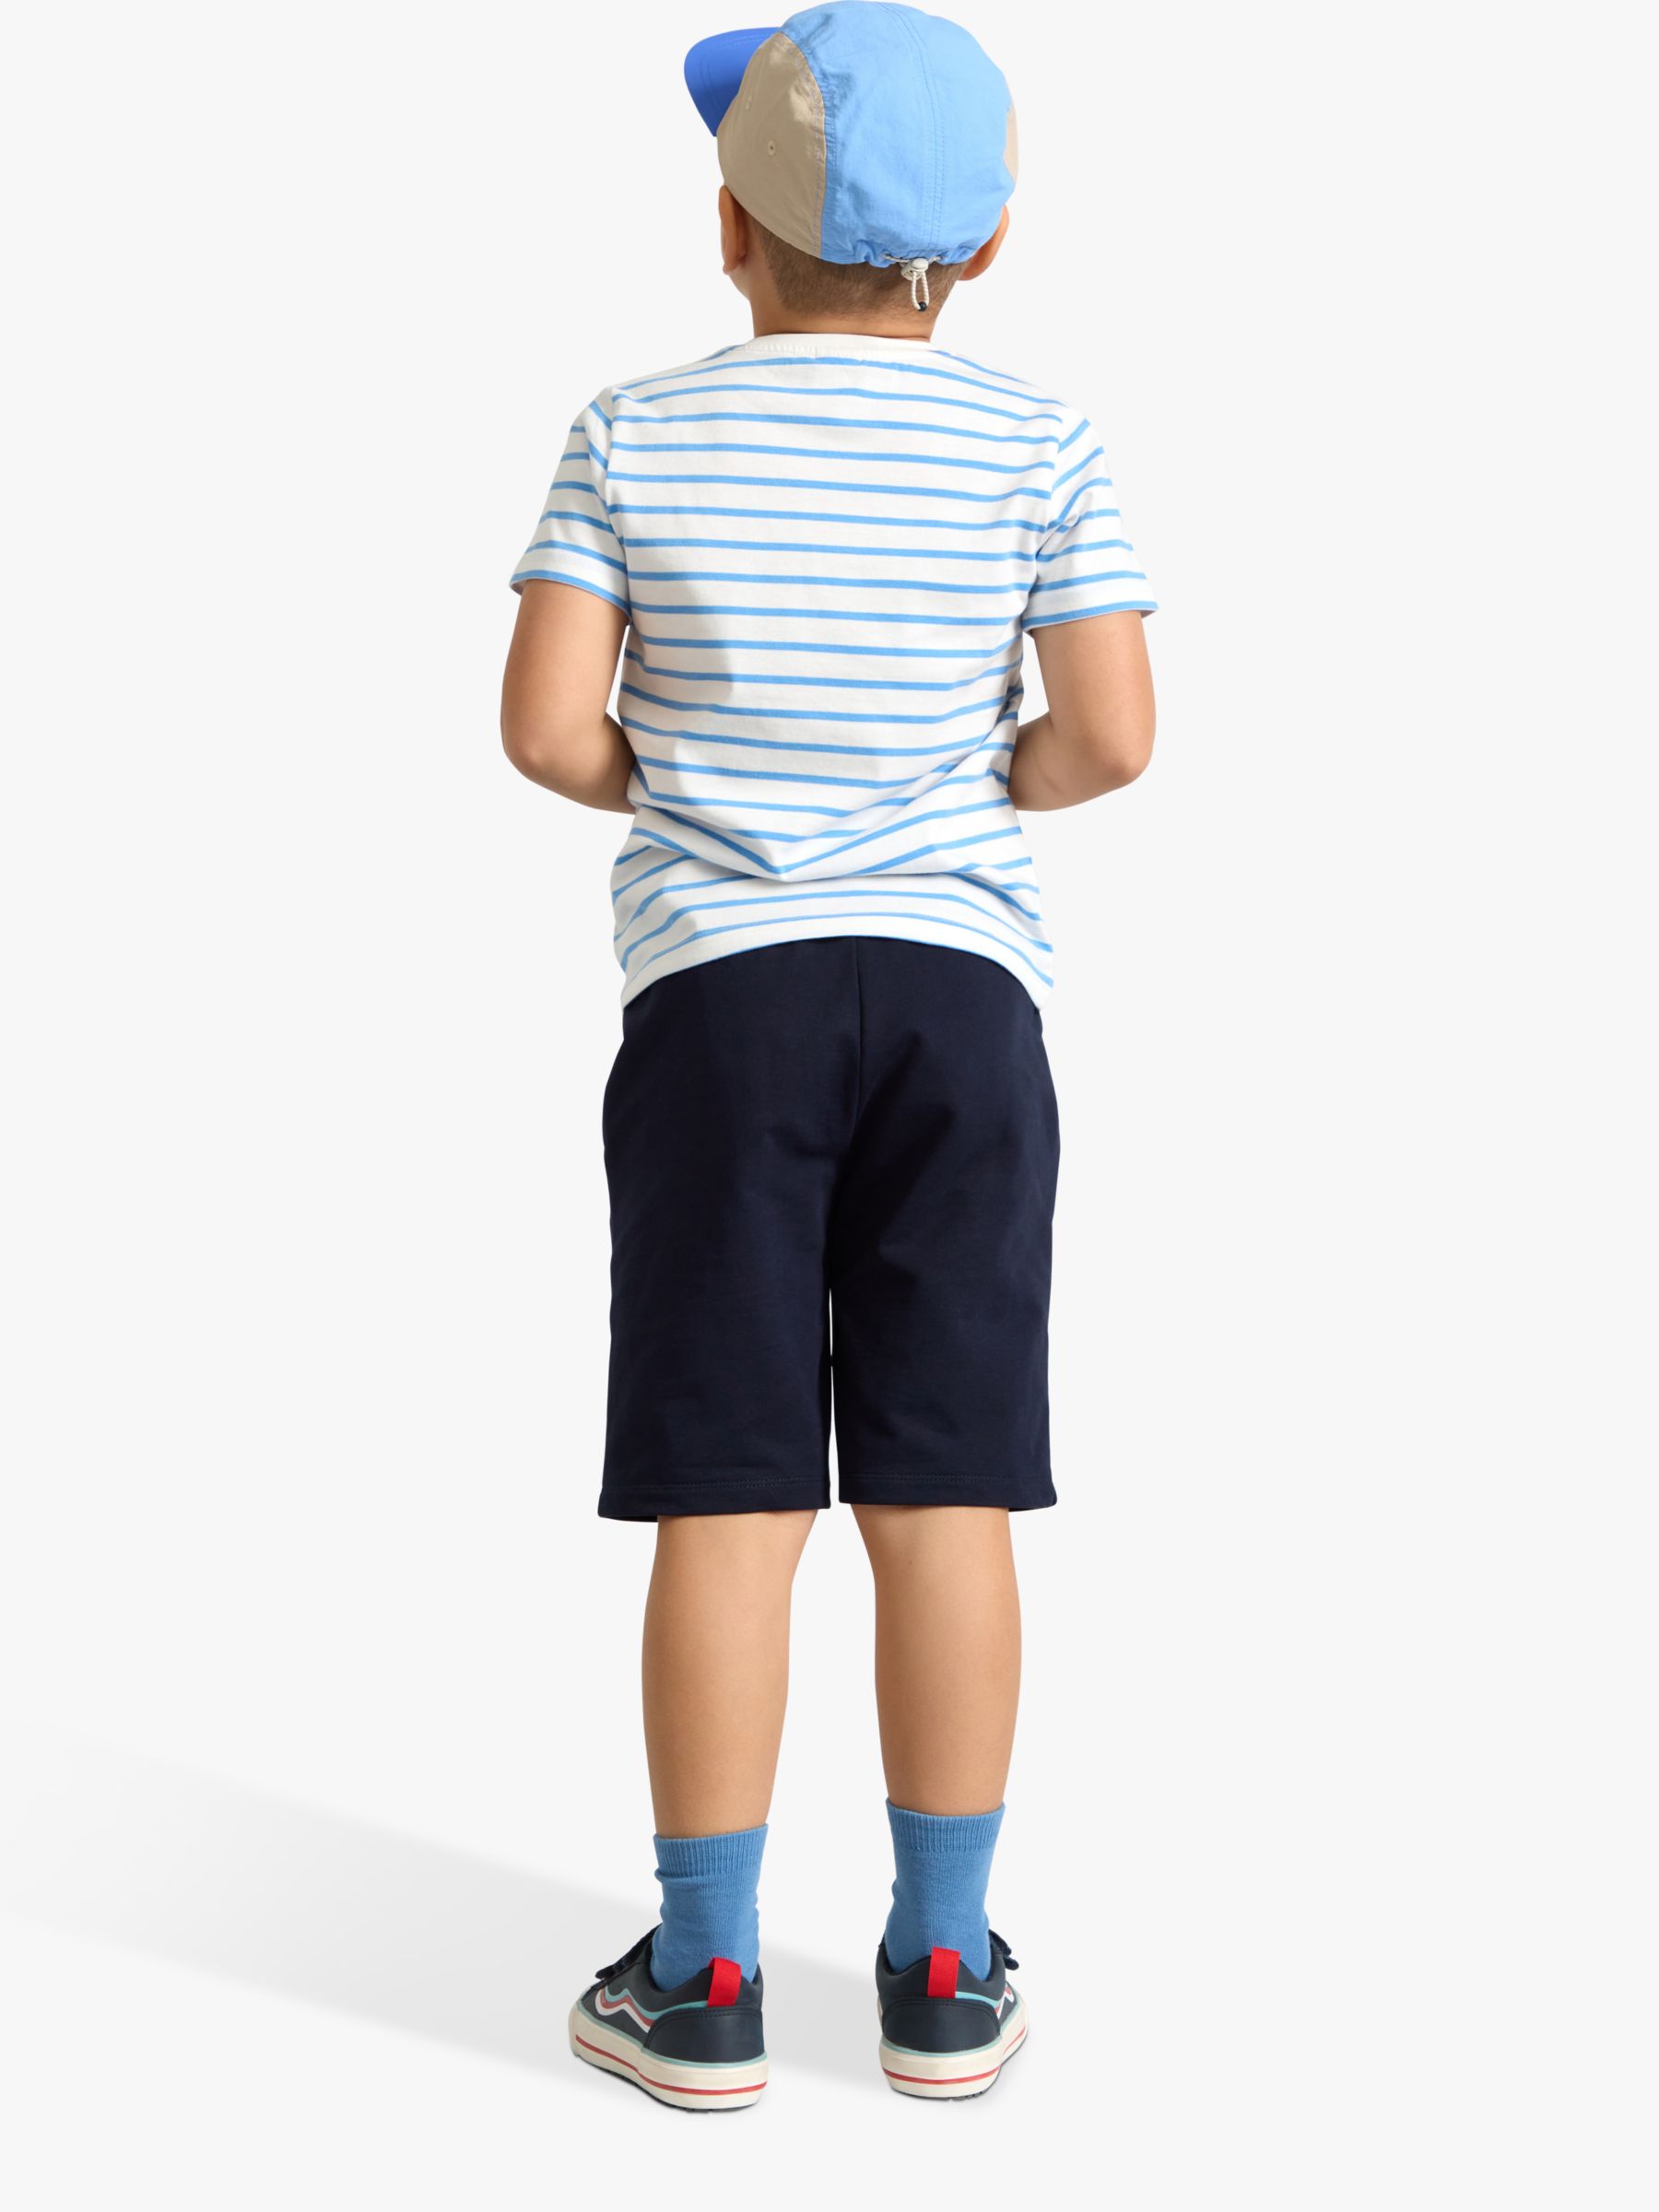 Lindex Kids' Organic Cotton Solid Comfy Shorts, Dark Navy, 2-4 years